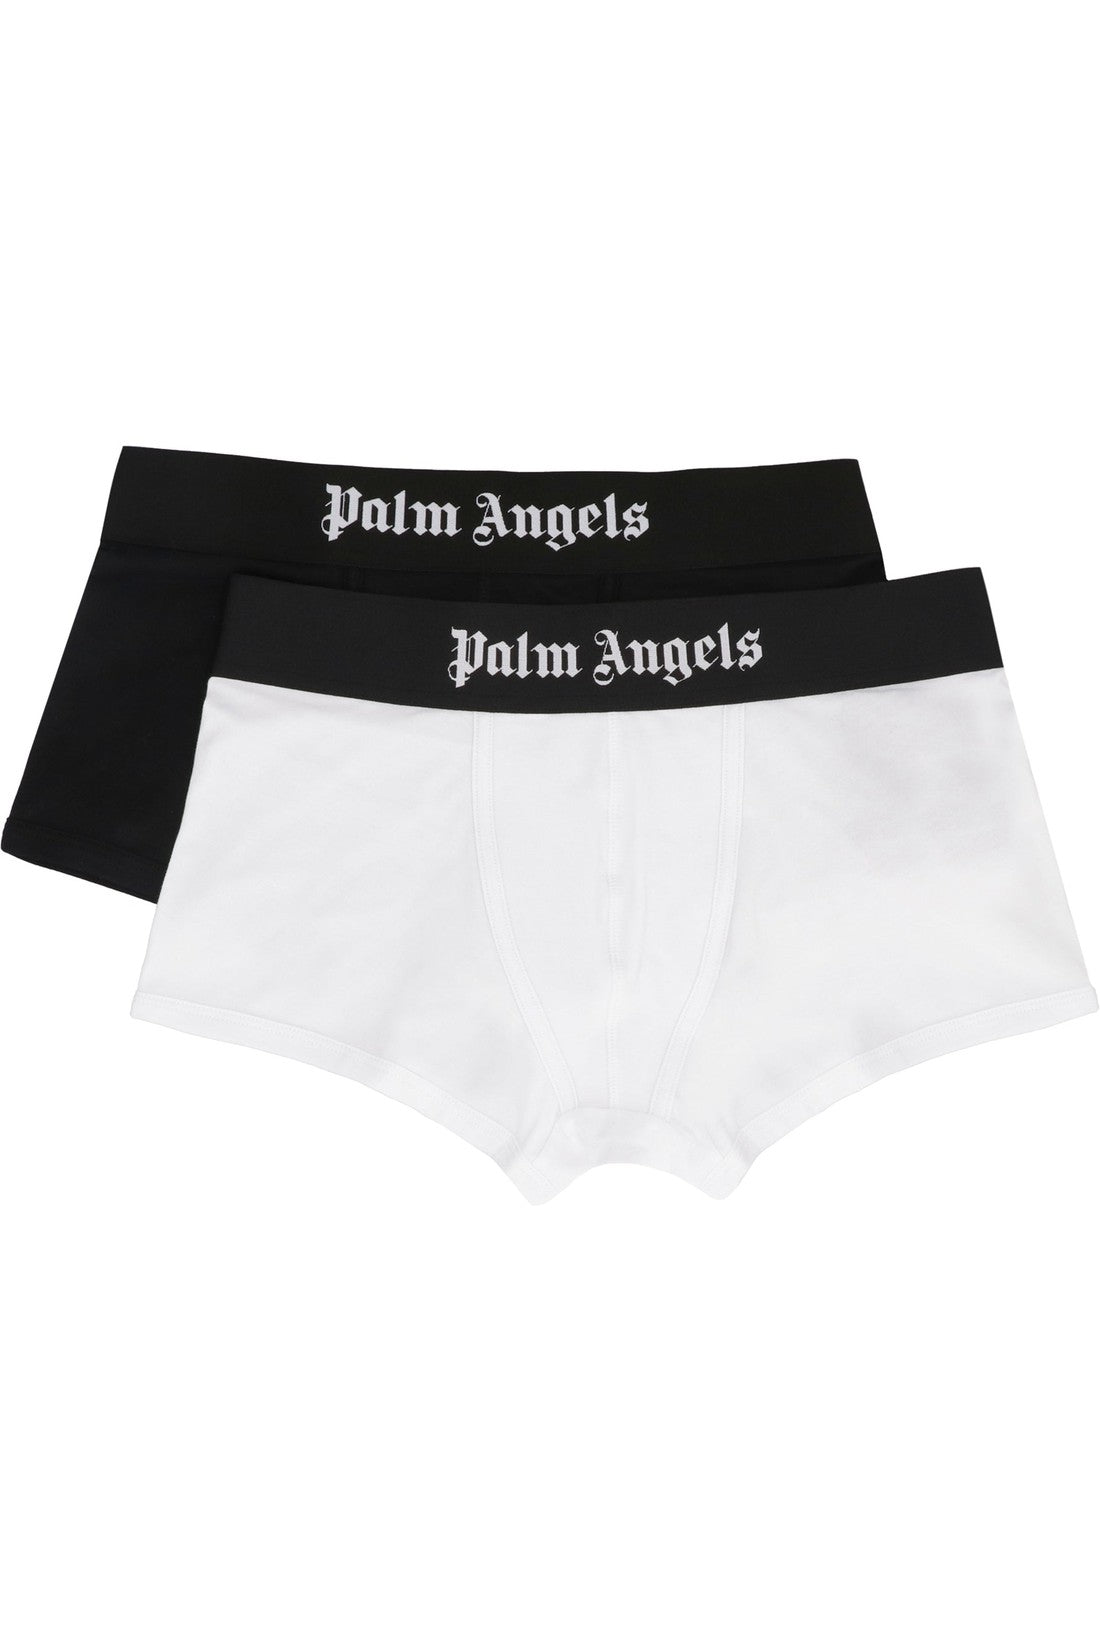 Palm Angels-OUTLET-SALE-Set of two cotton boxers-ARCHIVIST